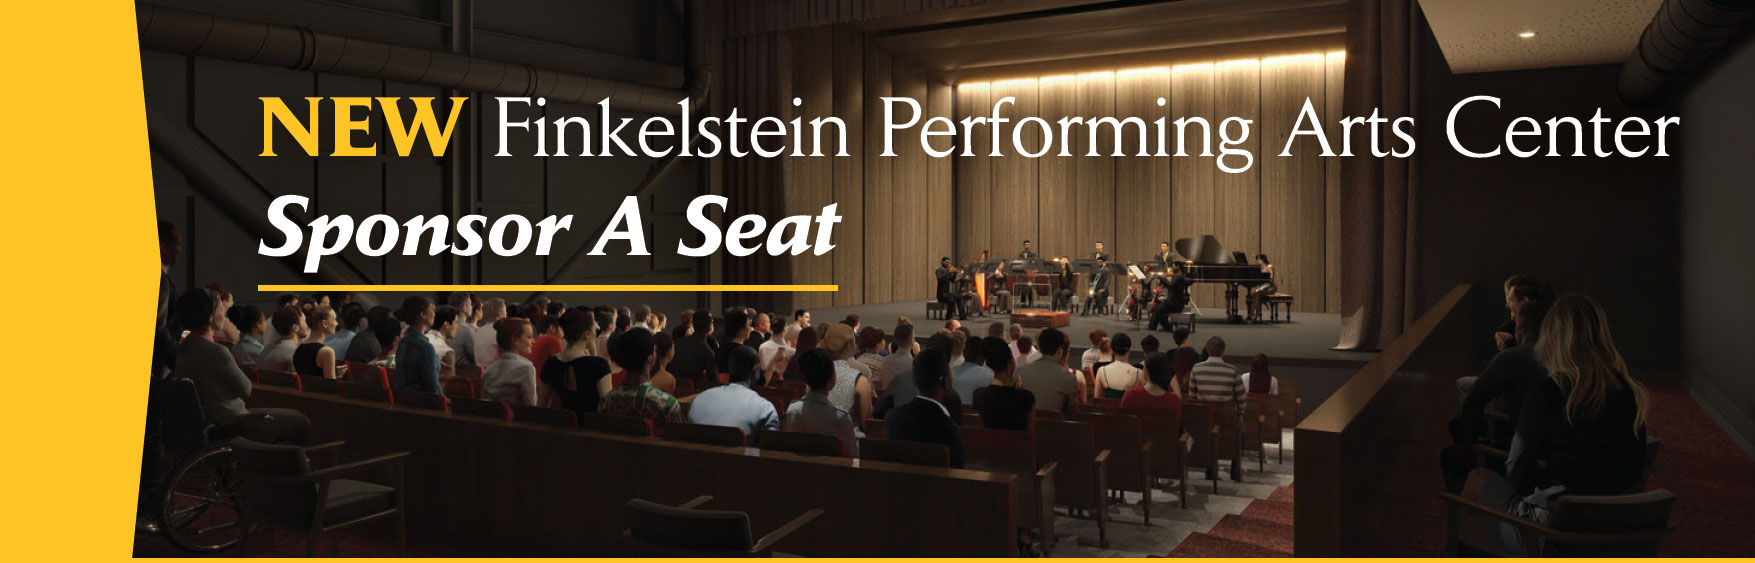 New Finkelstein Performing Arts Center Sponsor a Seat